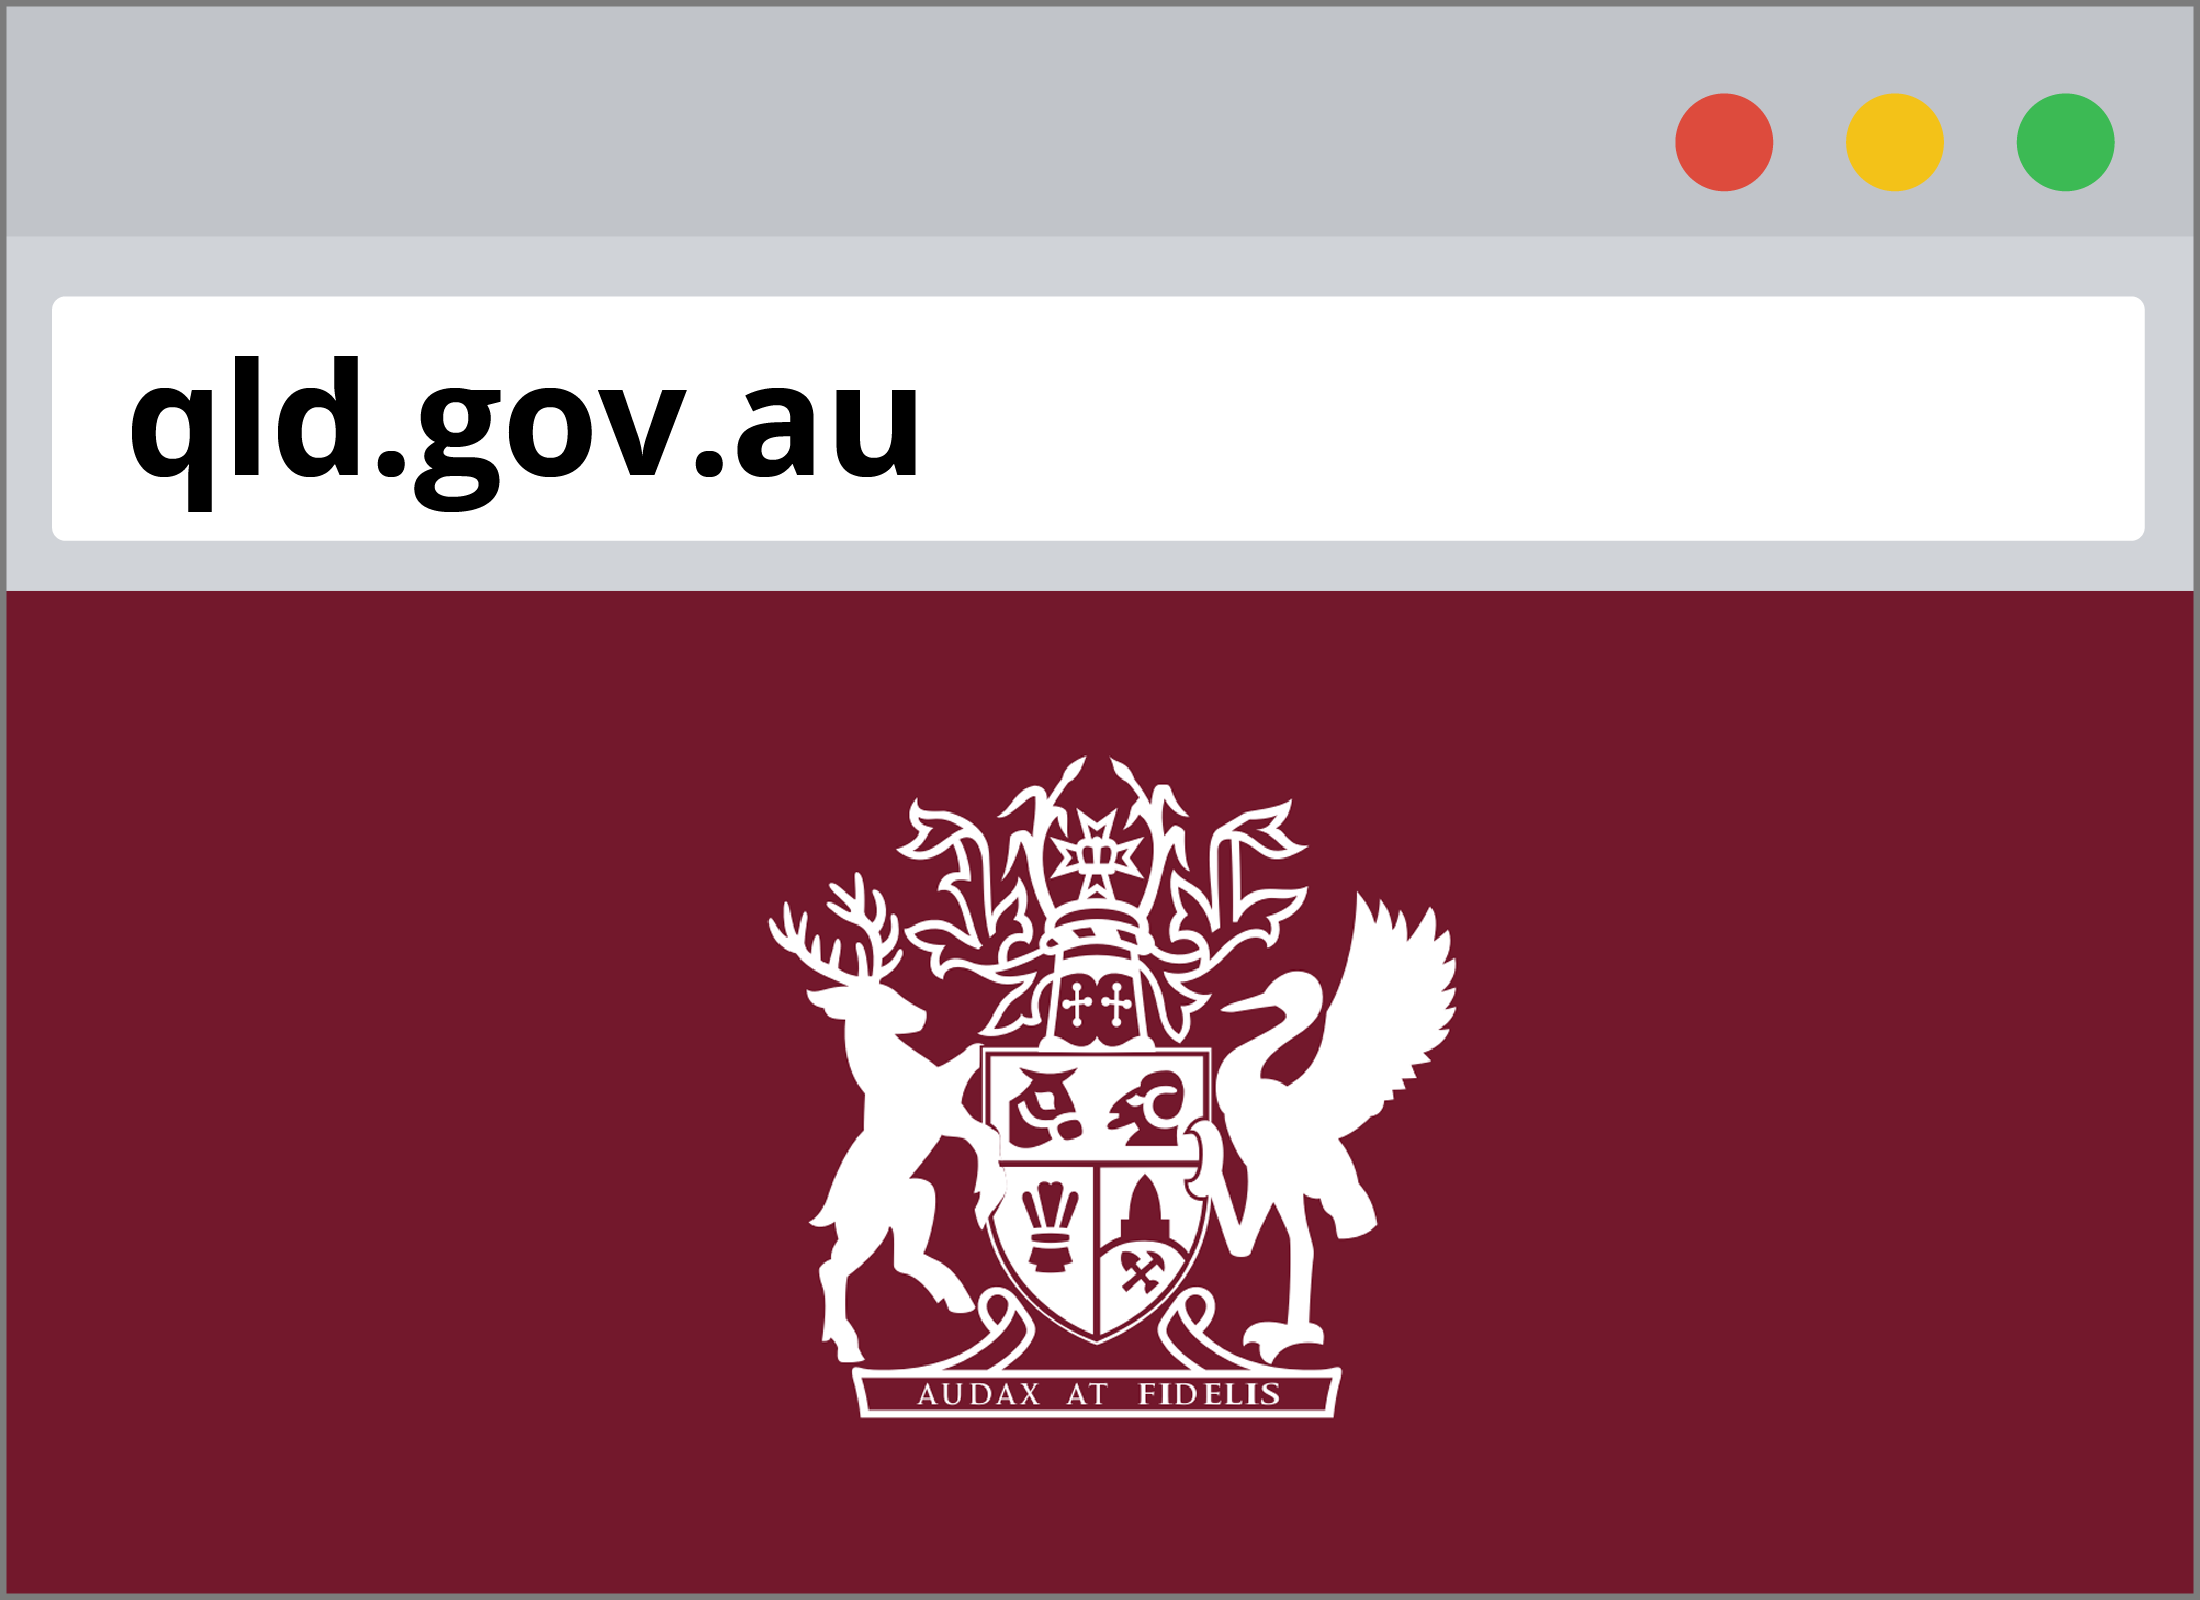 Sito web del governo del Queensland